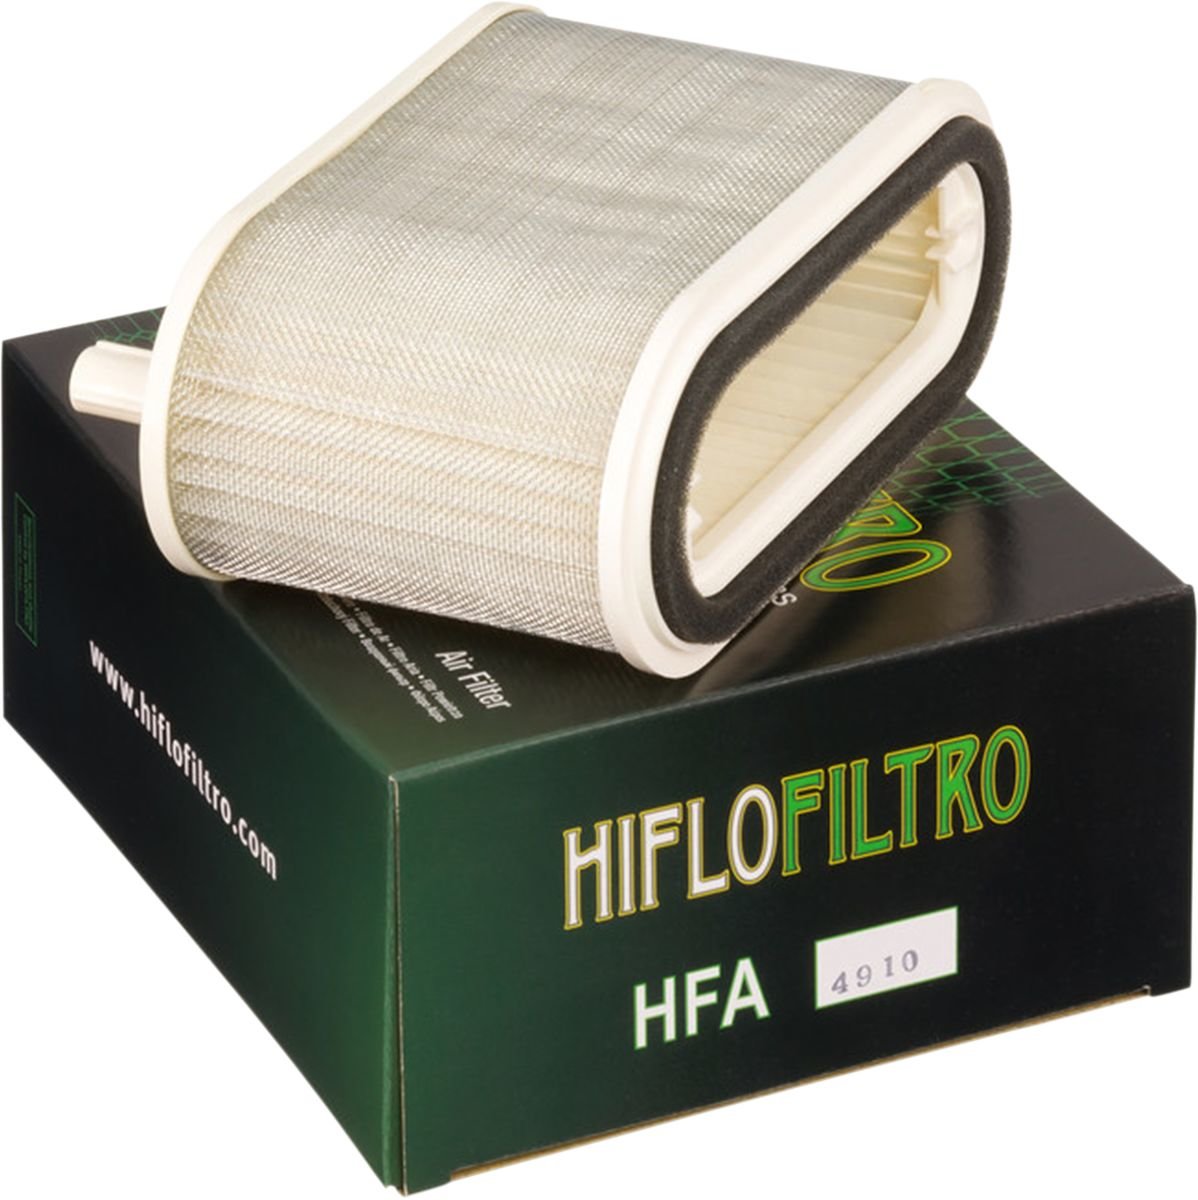 HIFLOFILTRO Filterair Hiflofiltro-Yam von HifloFiltro